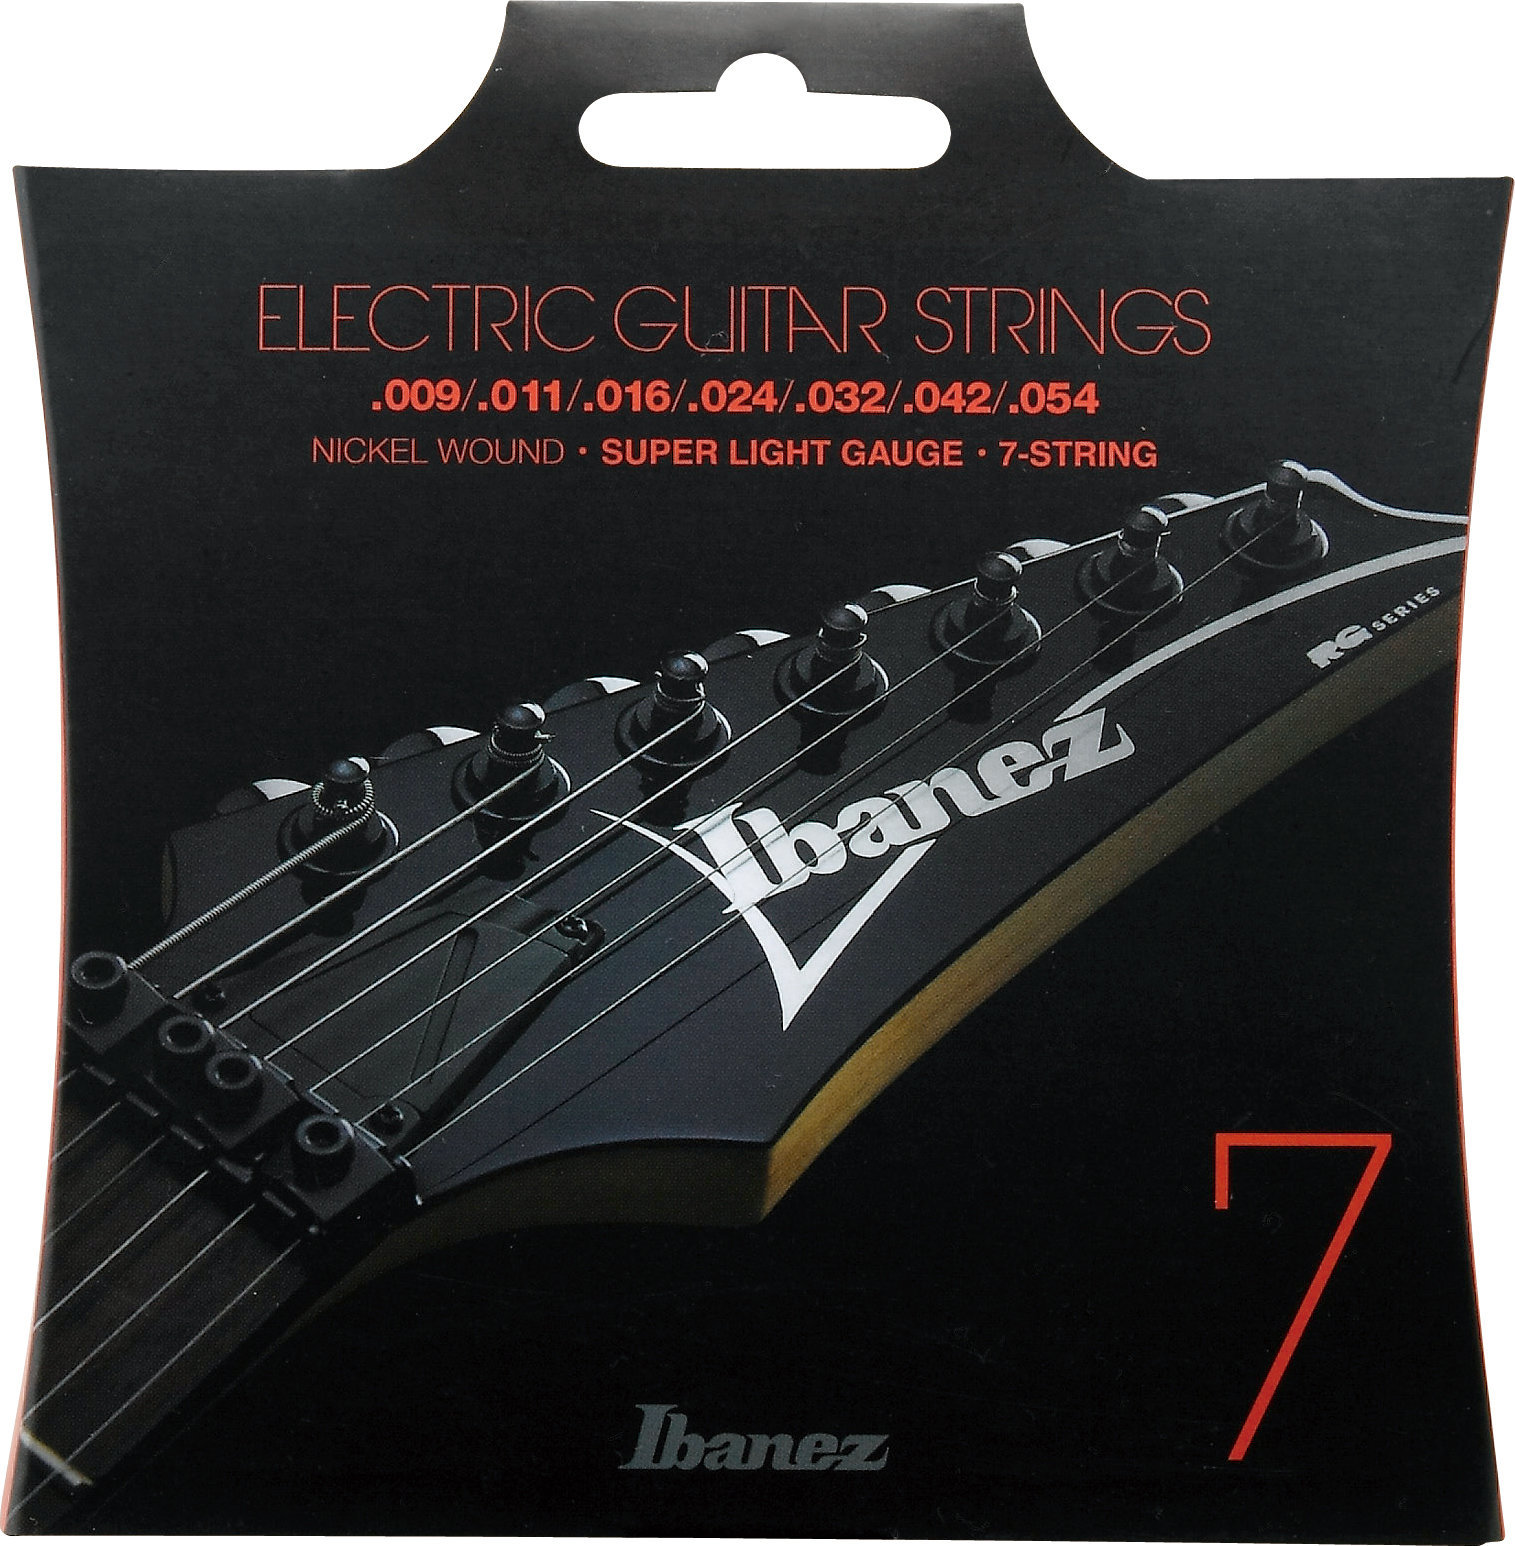 E-guitar strings Ibanez IEGS7